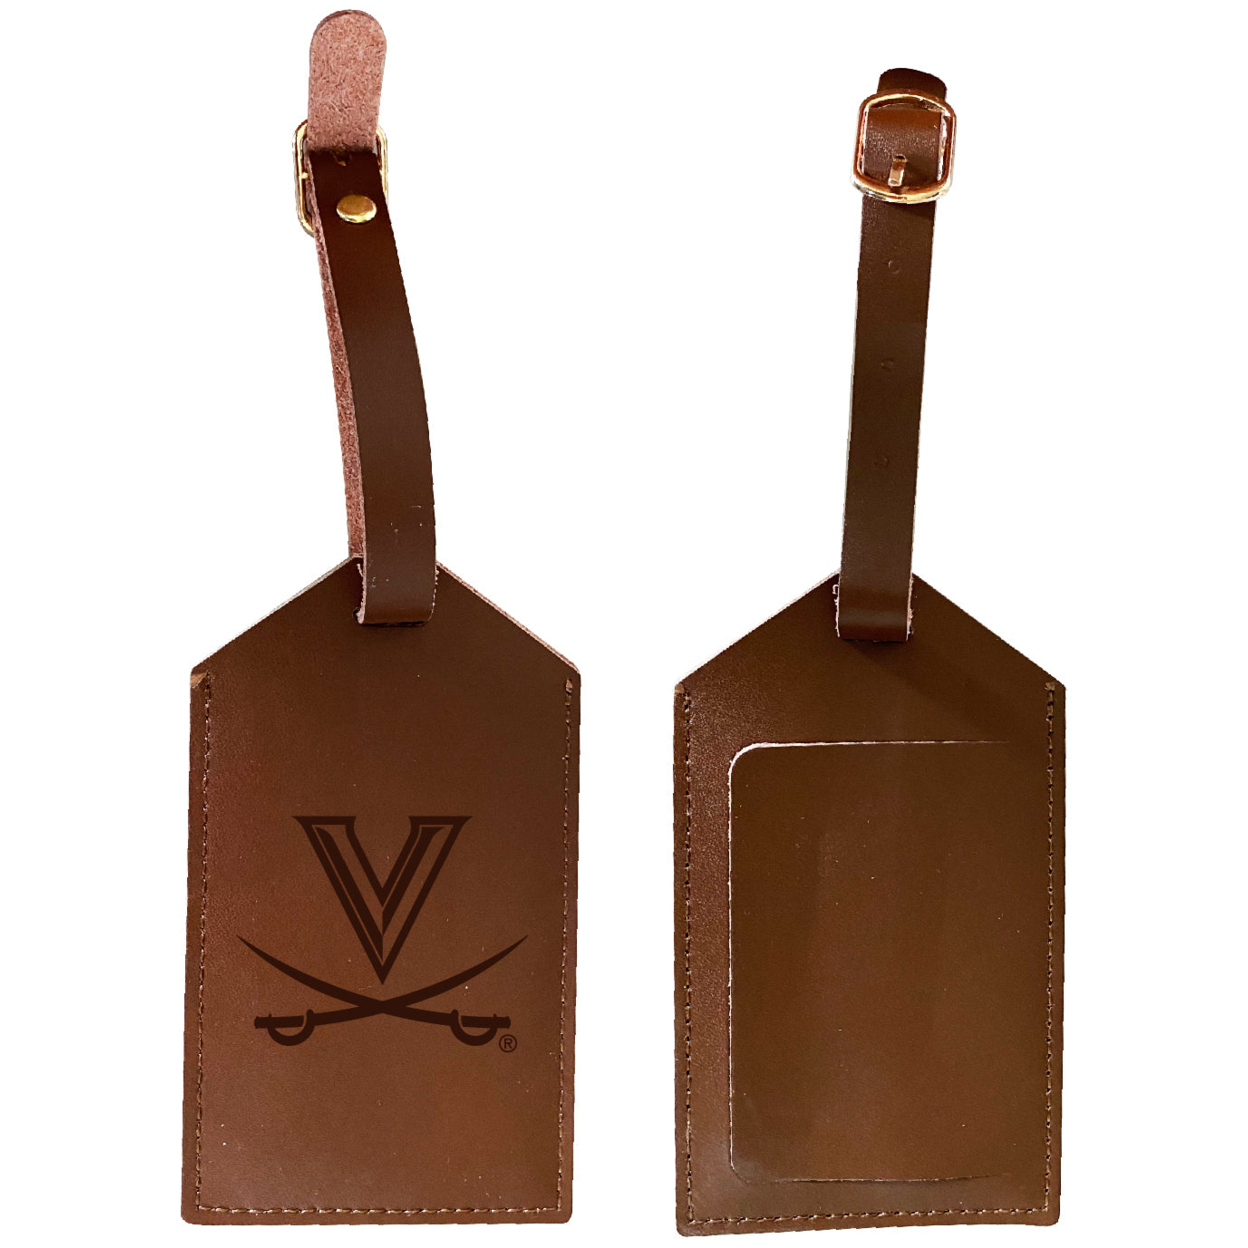 Virginia Cavaliers Leather Luggage Tag Engraved